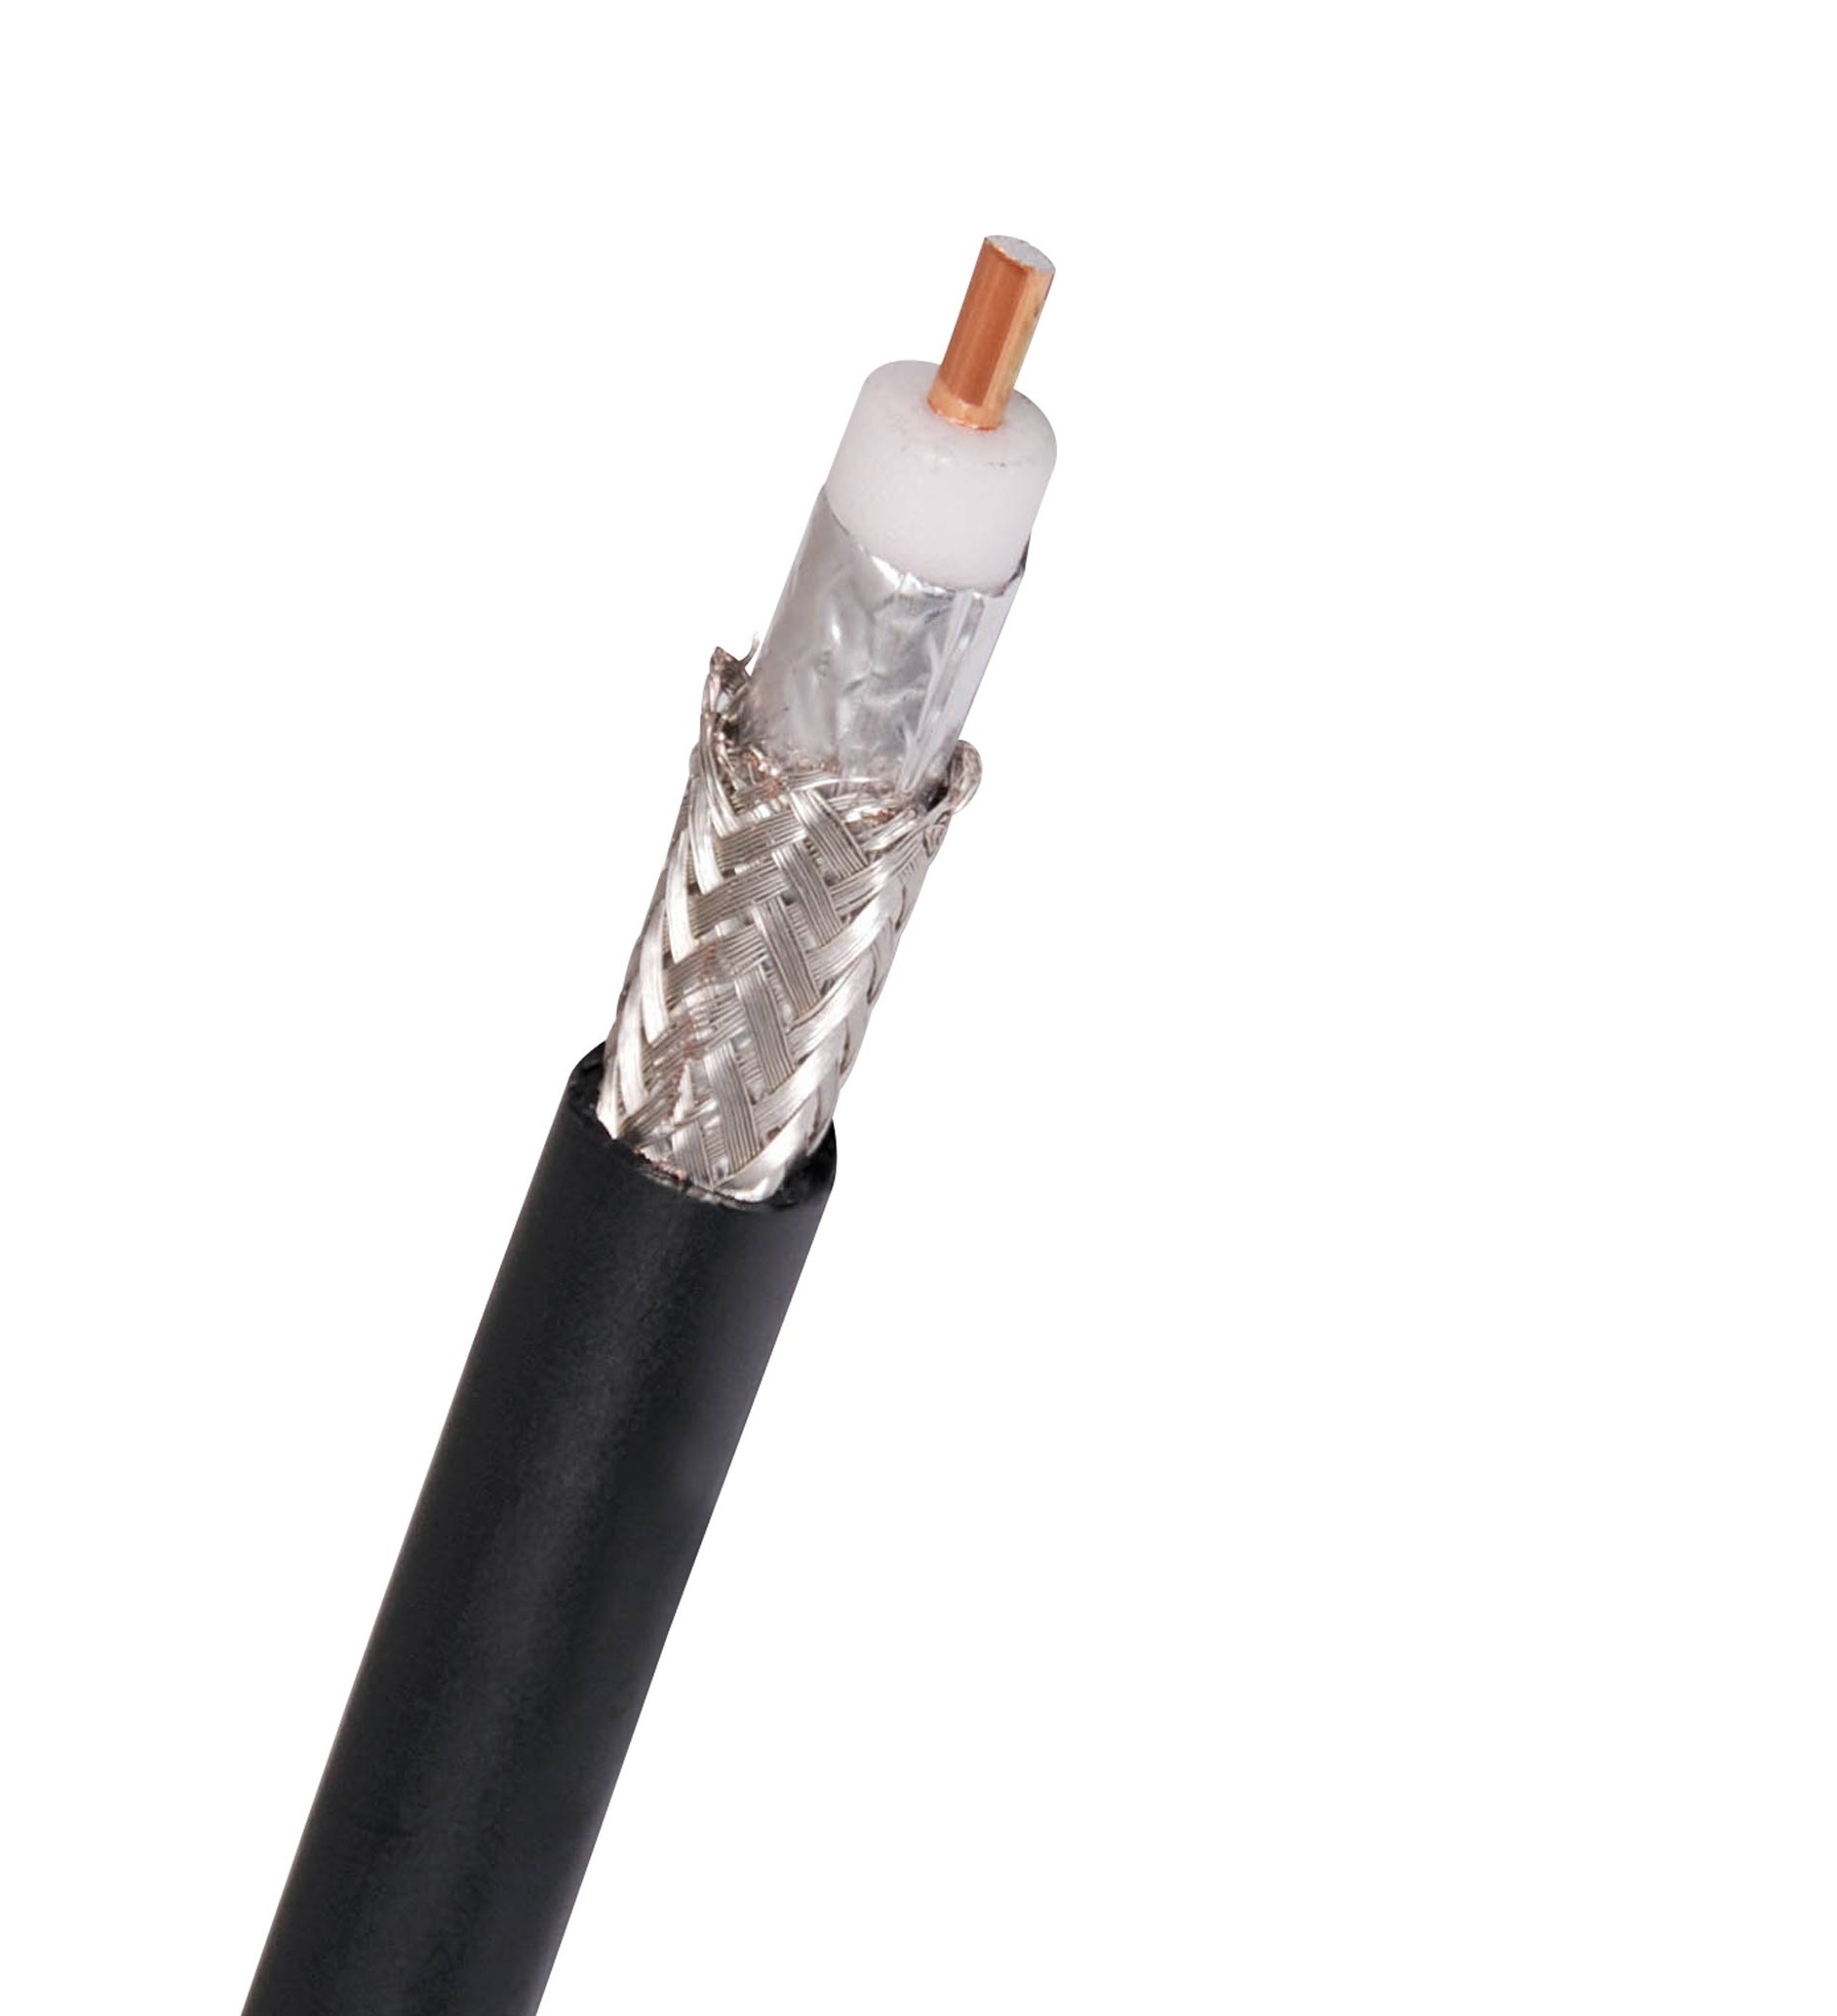 HLF 300 Coaxial Cable